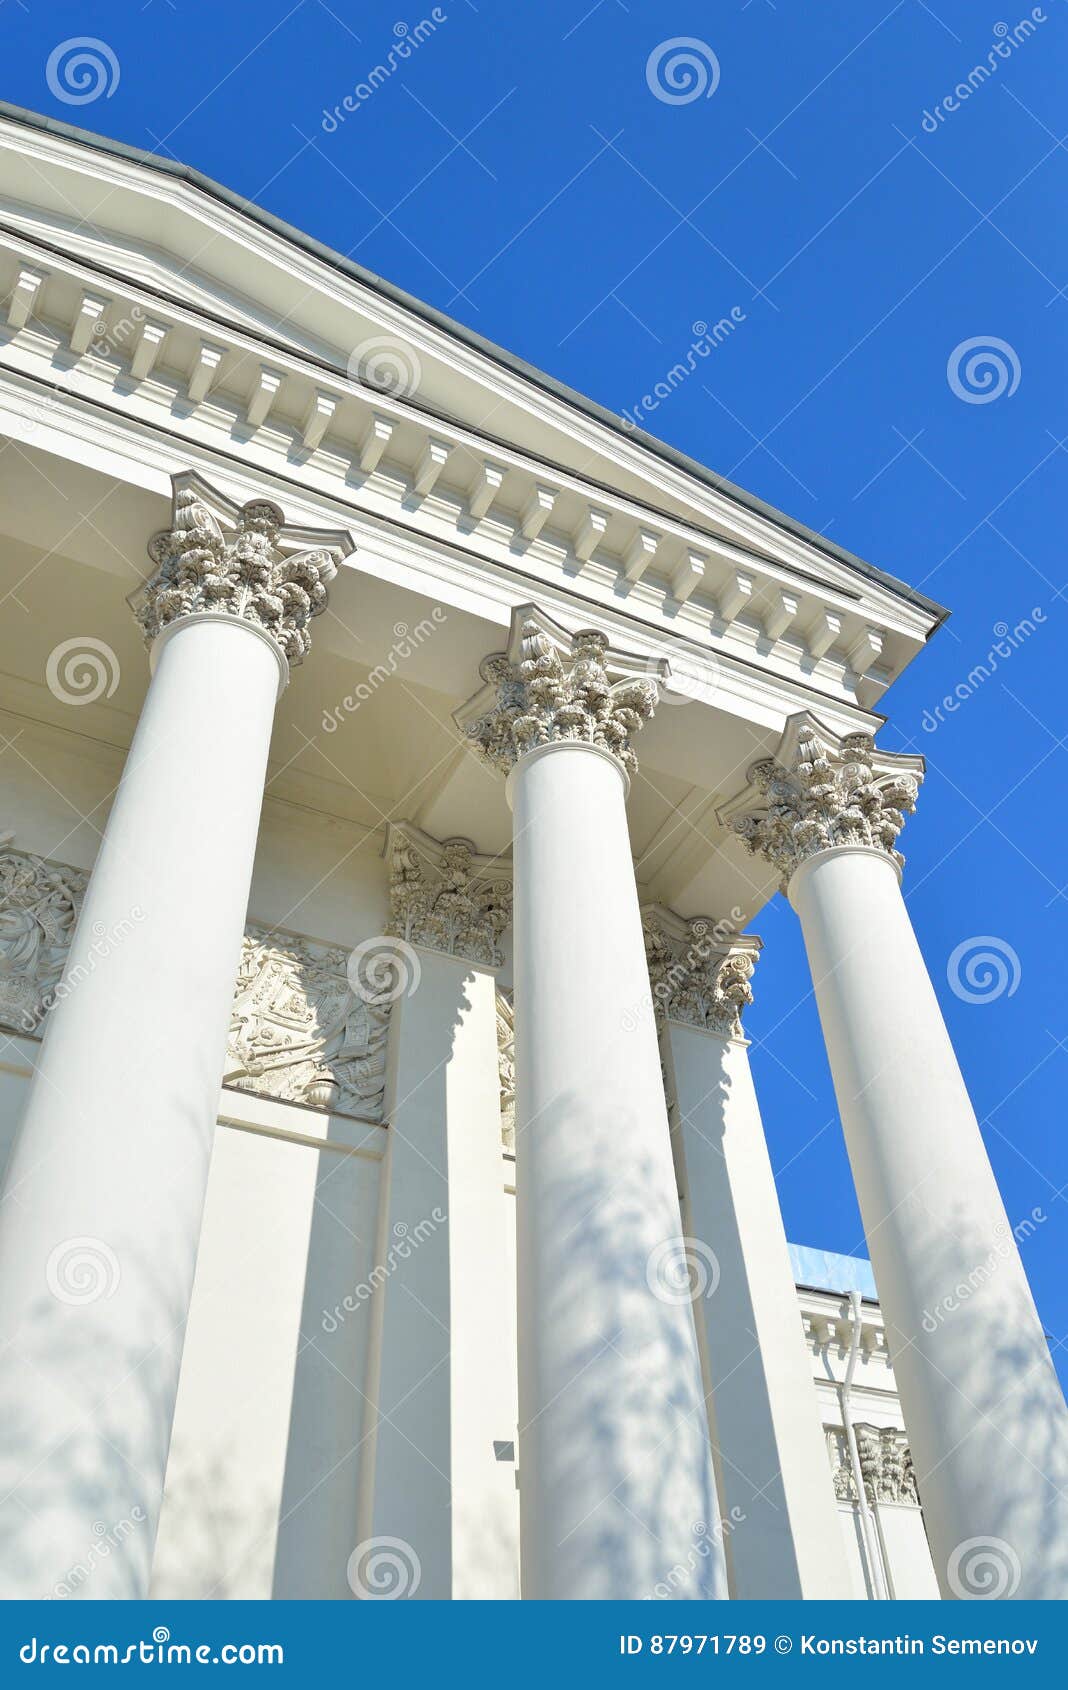 columns of the trinity-izmailovsky cathedral.